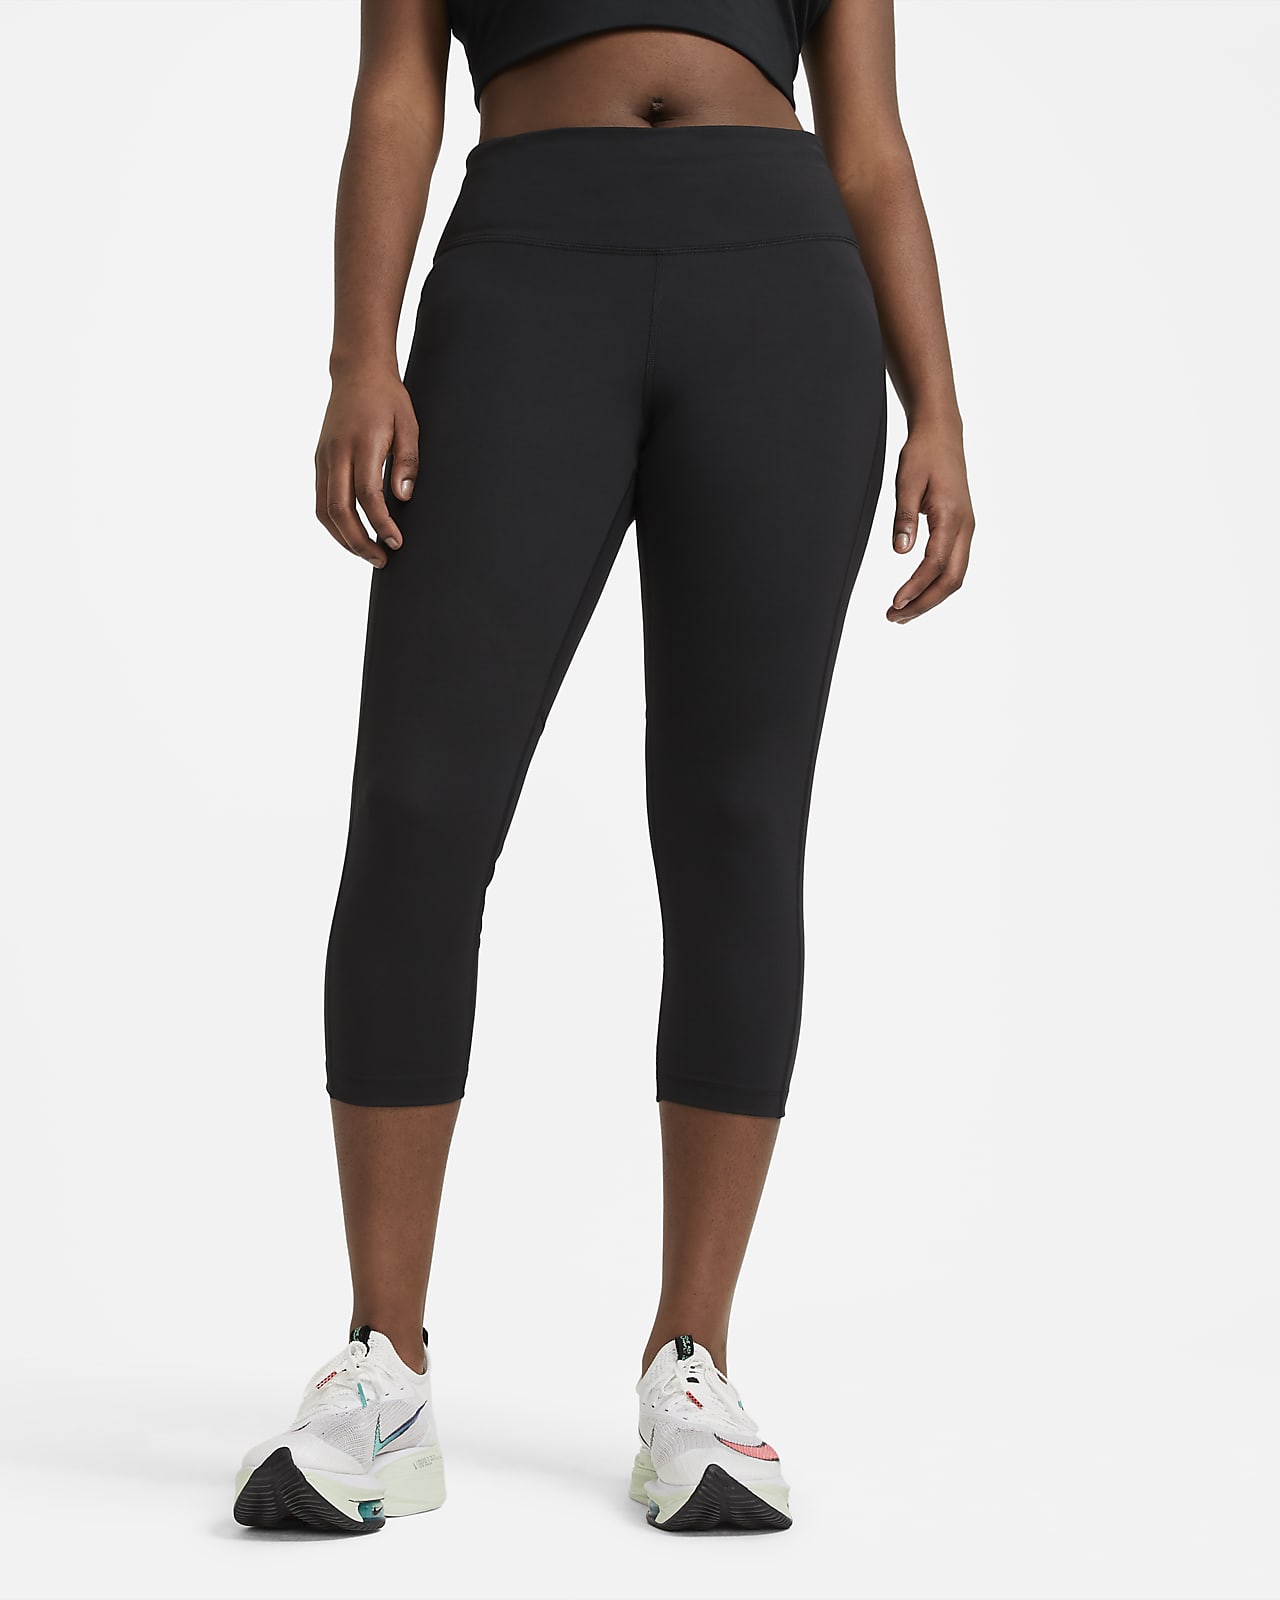 Nike Women's Mid-Rise Crop Leggings (Plus Size).